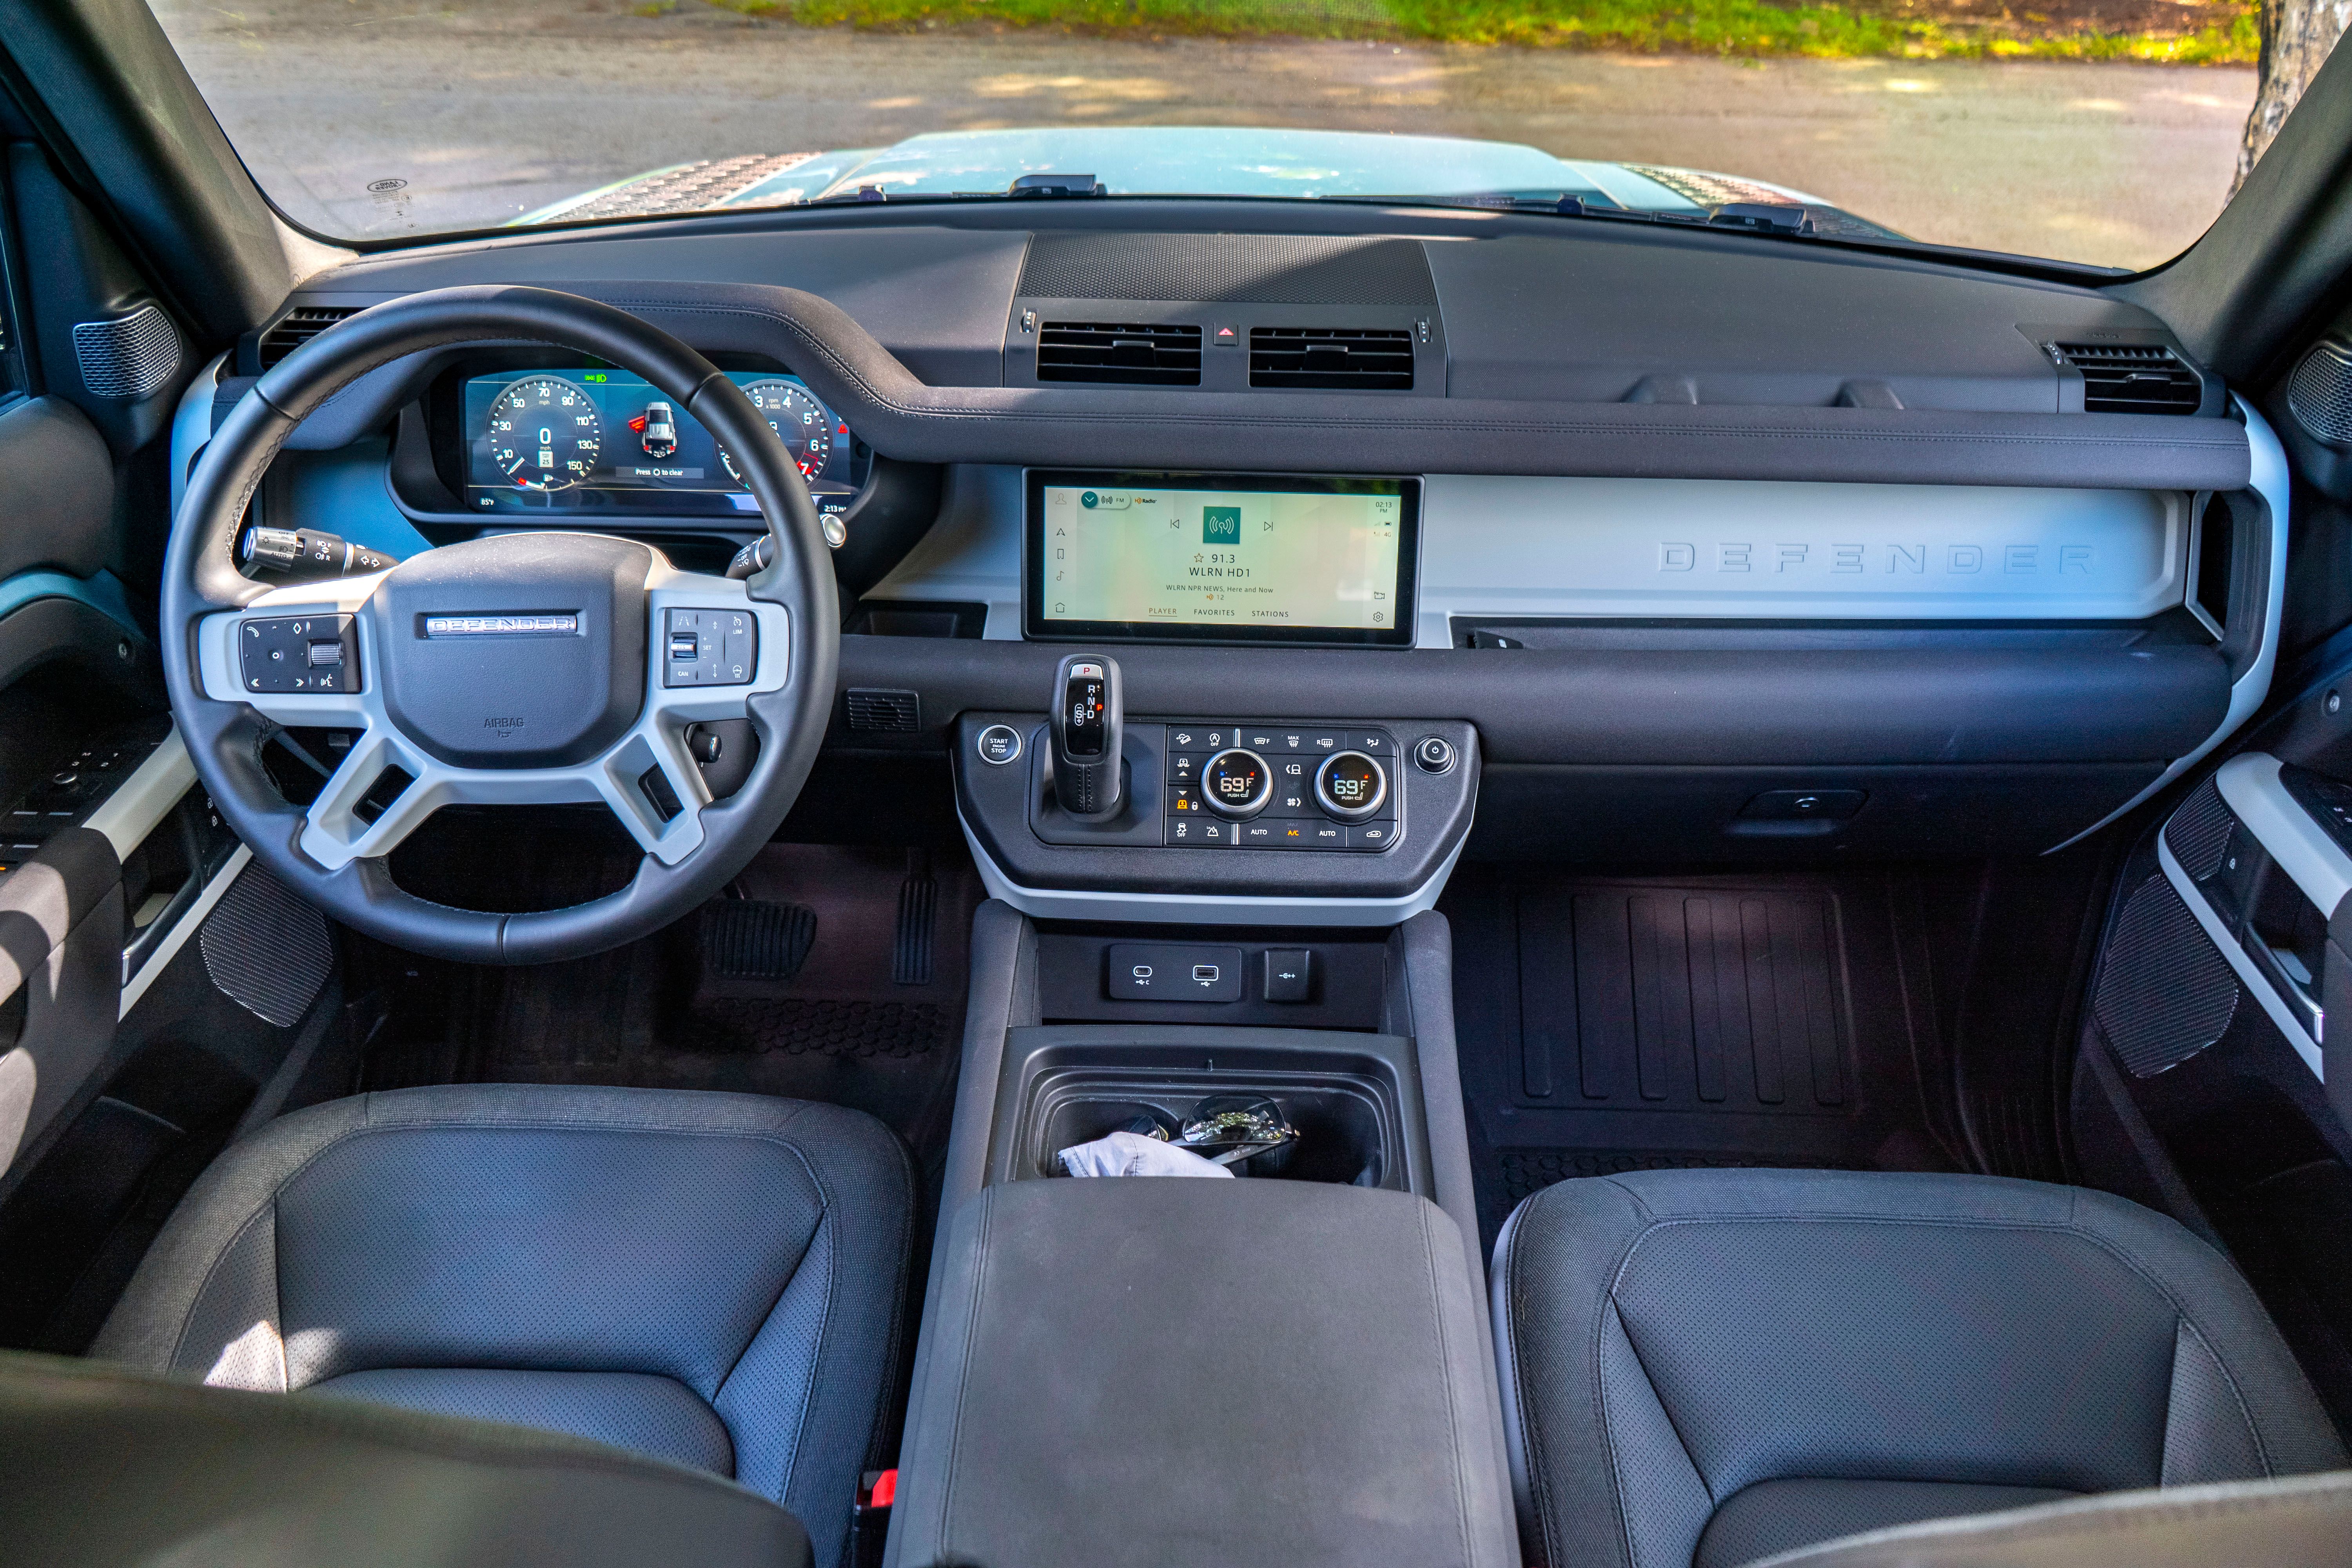 2020 Land Rover Defender - Driven